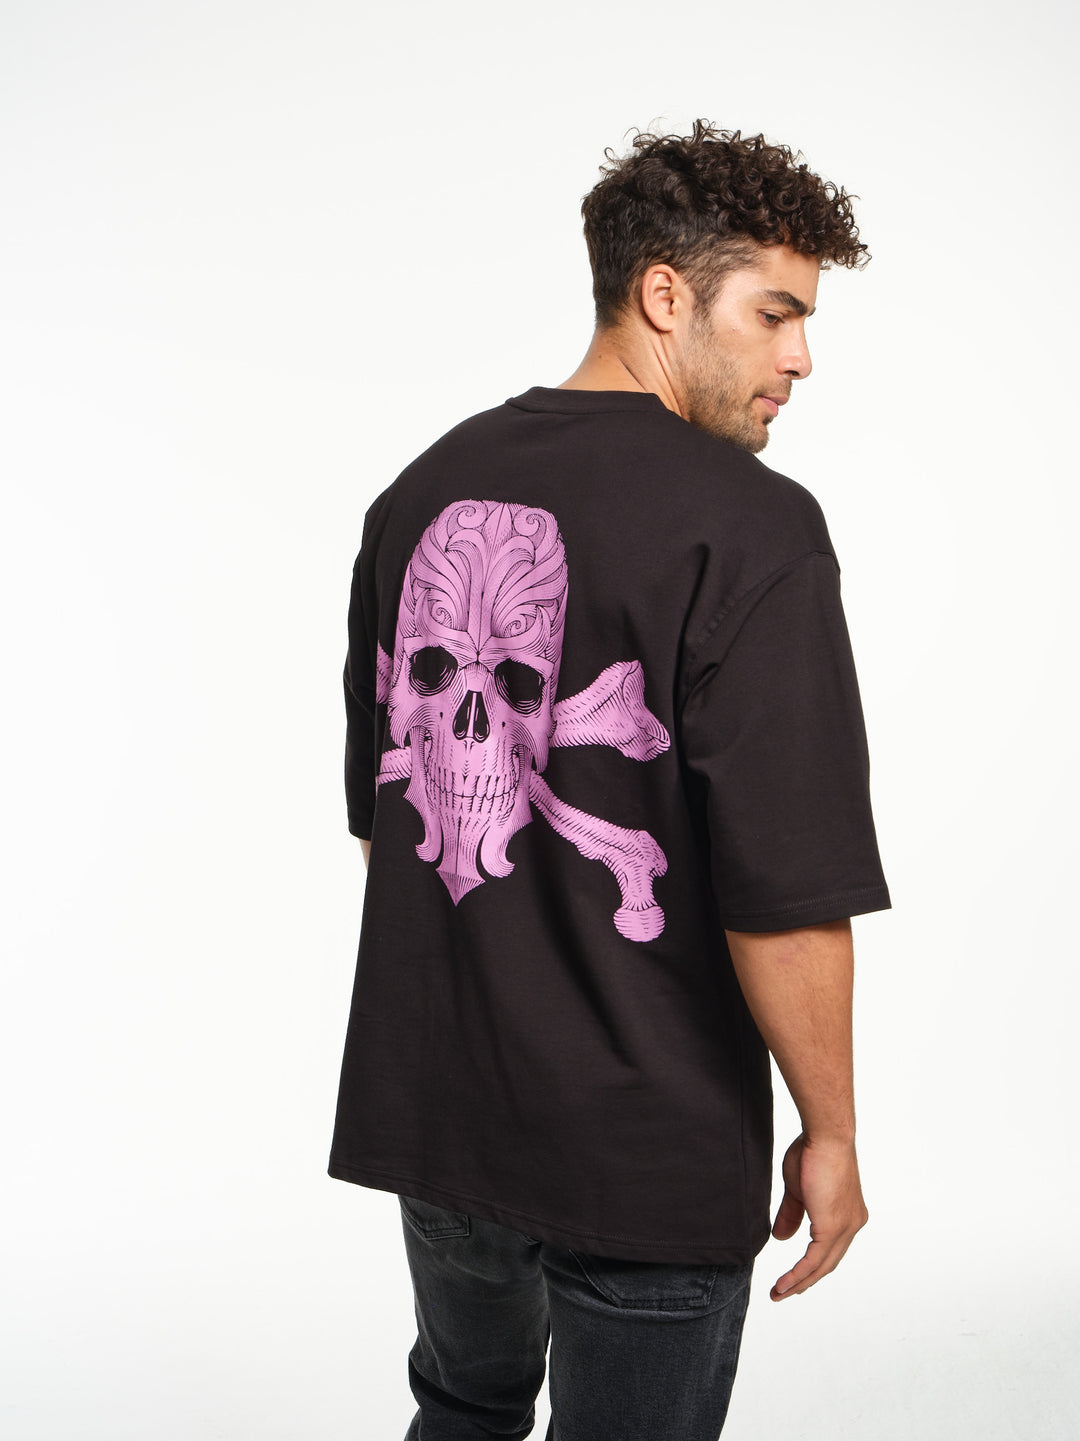 Black & Lavender Roger T-shirt